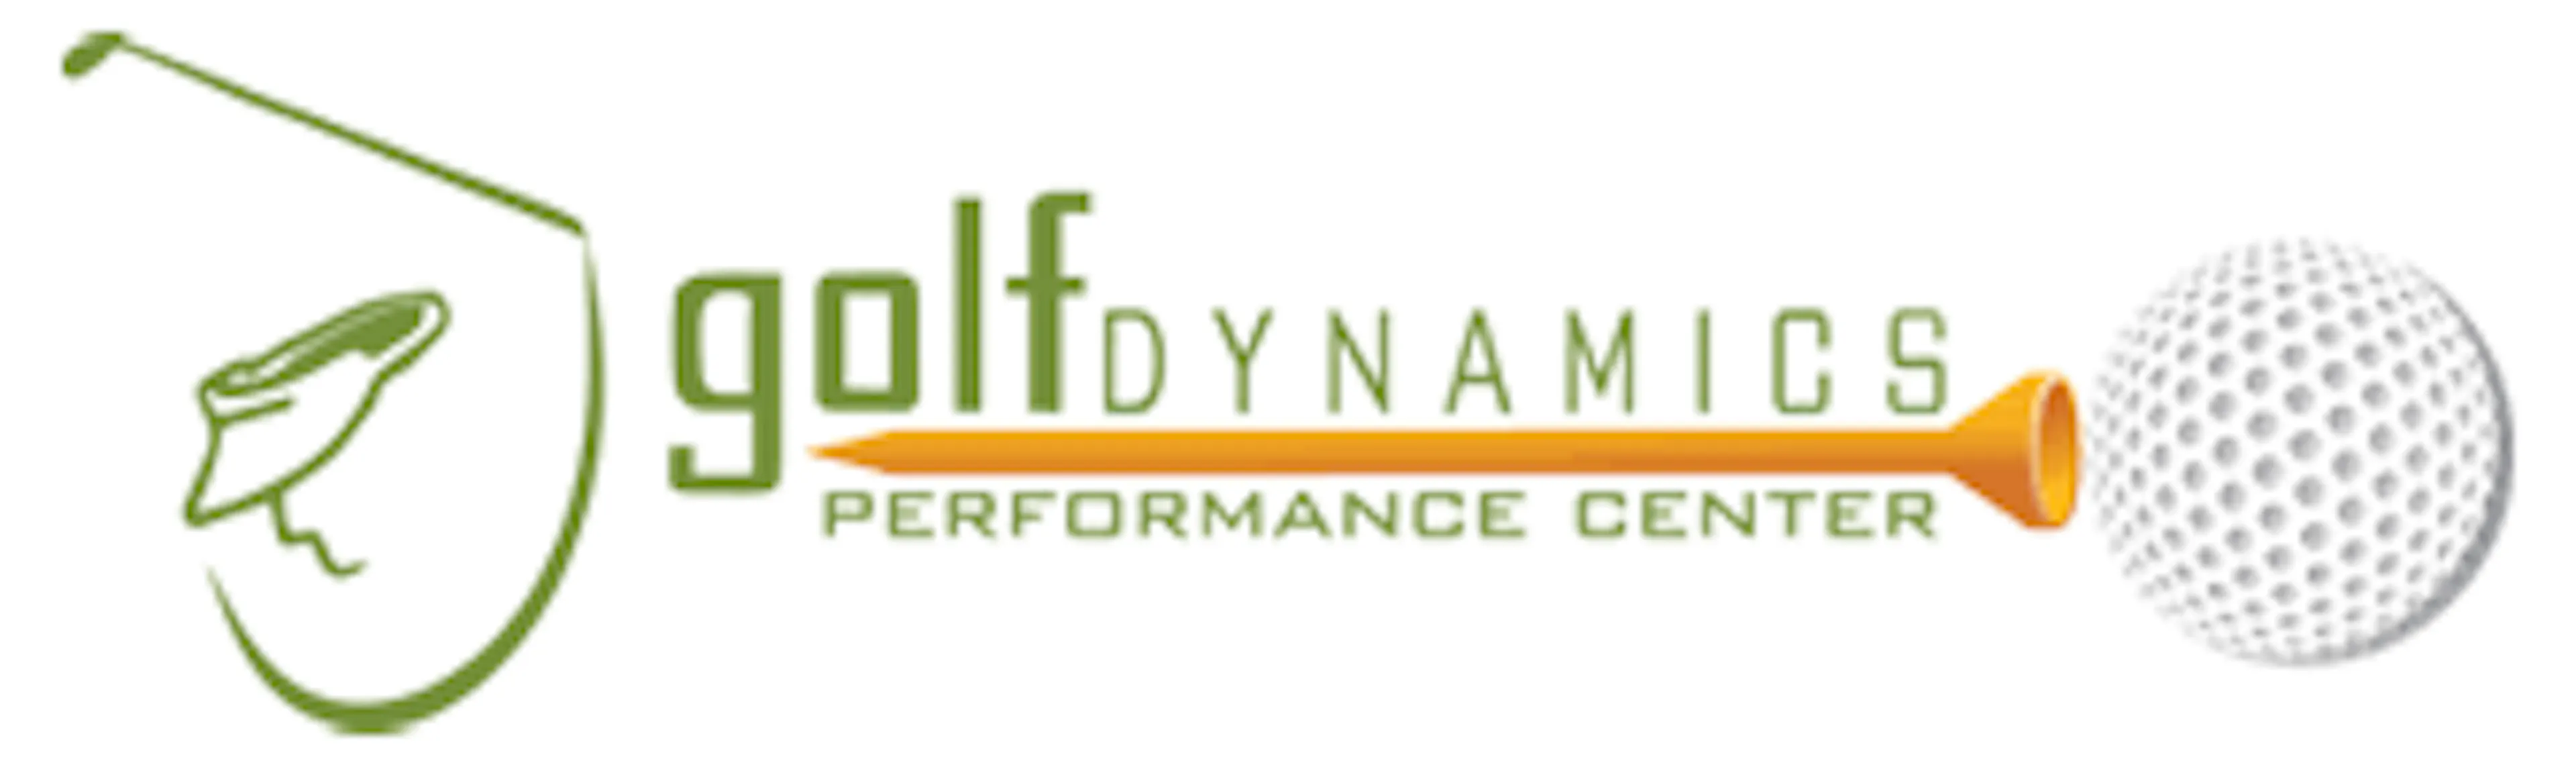 golf dynamics performance center